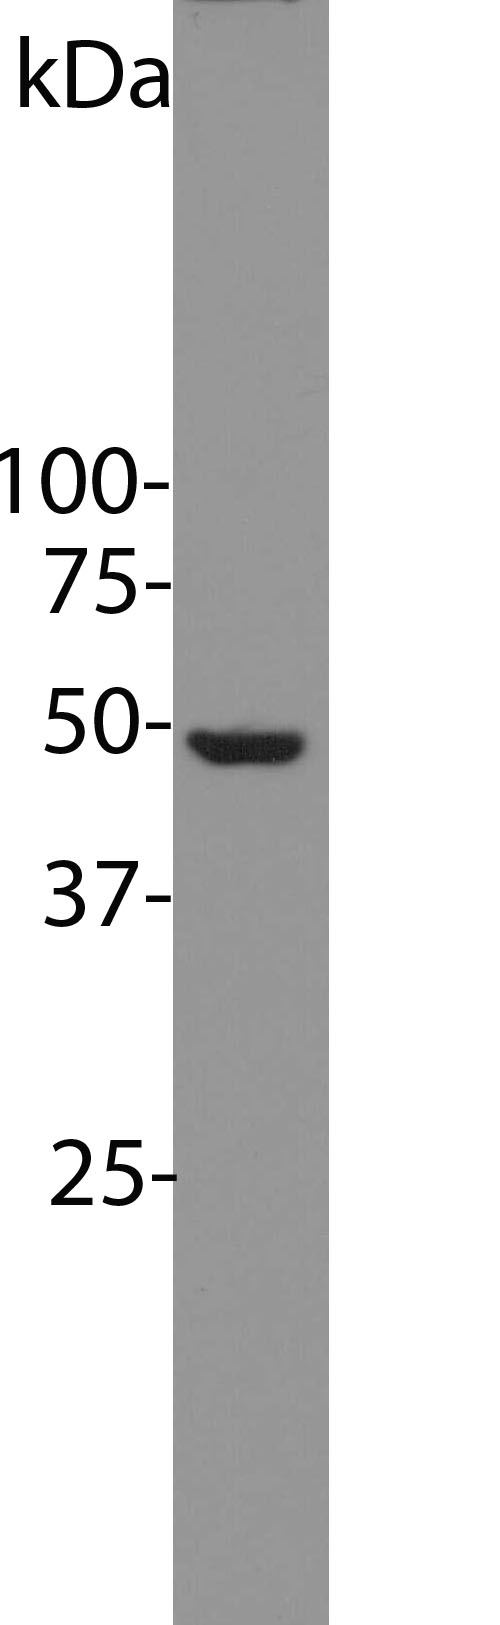 ENO1 / Alpha Enolase Antibody - Blot of HeLa cell lysates probed with monoclonal antibody ENO1 / Alpha Enolase antibody. The antibody stains a single sharp band corresponding to enolase-1/alpha-enolase/NNE at about 47 kDa.